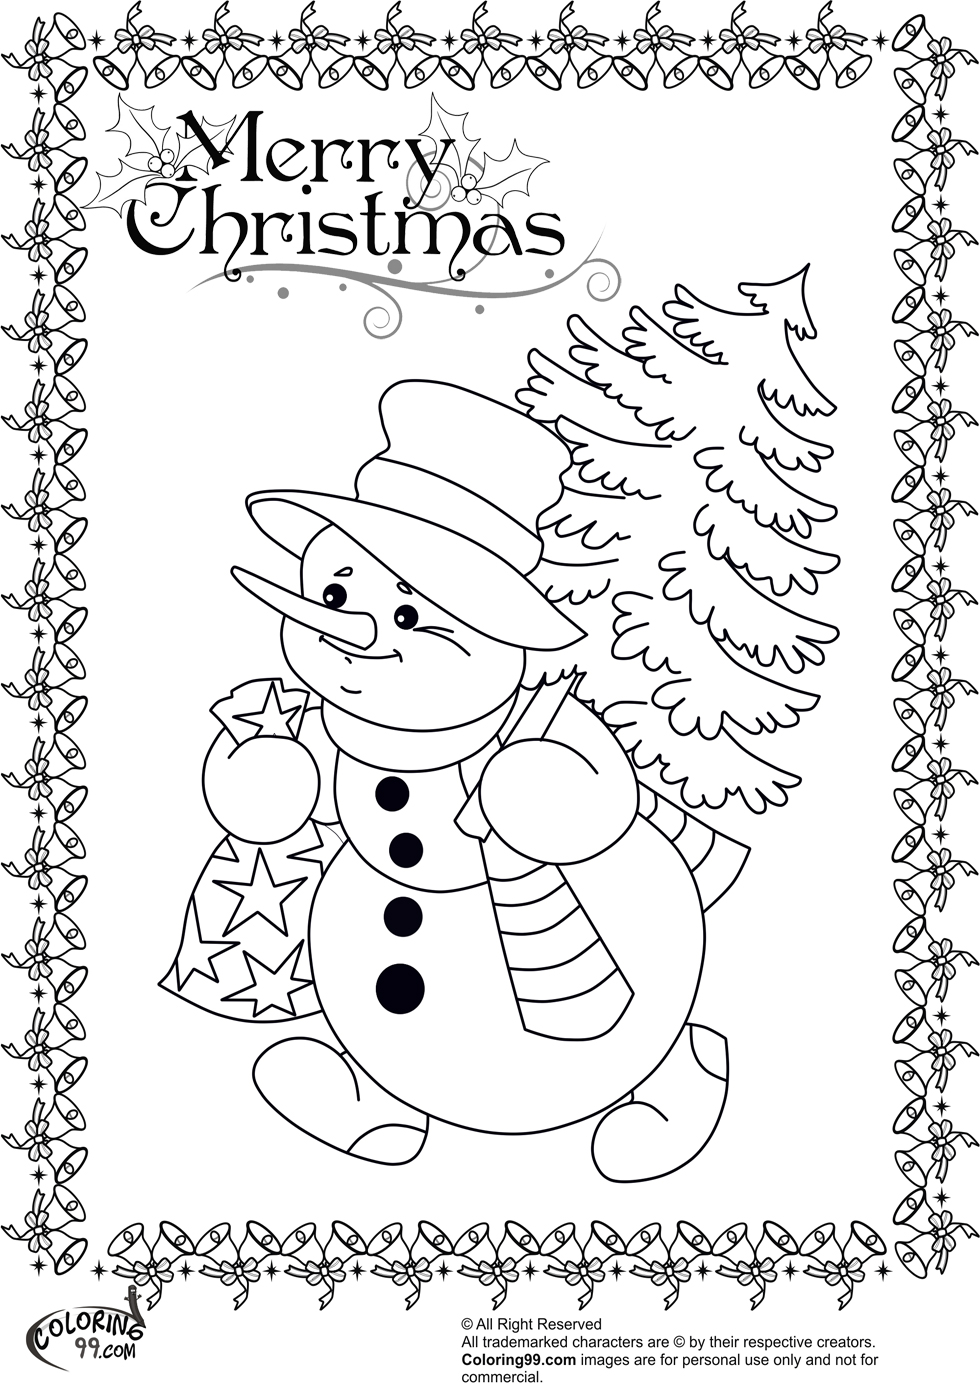 Snowman Coloring Pages | Team colors